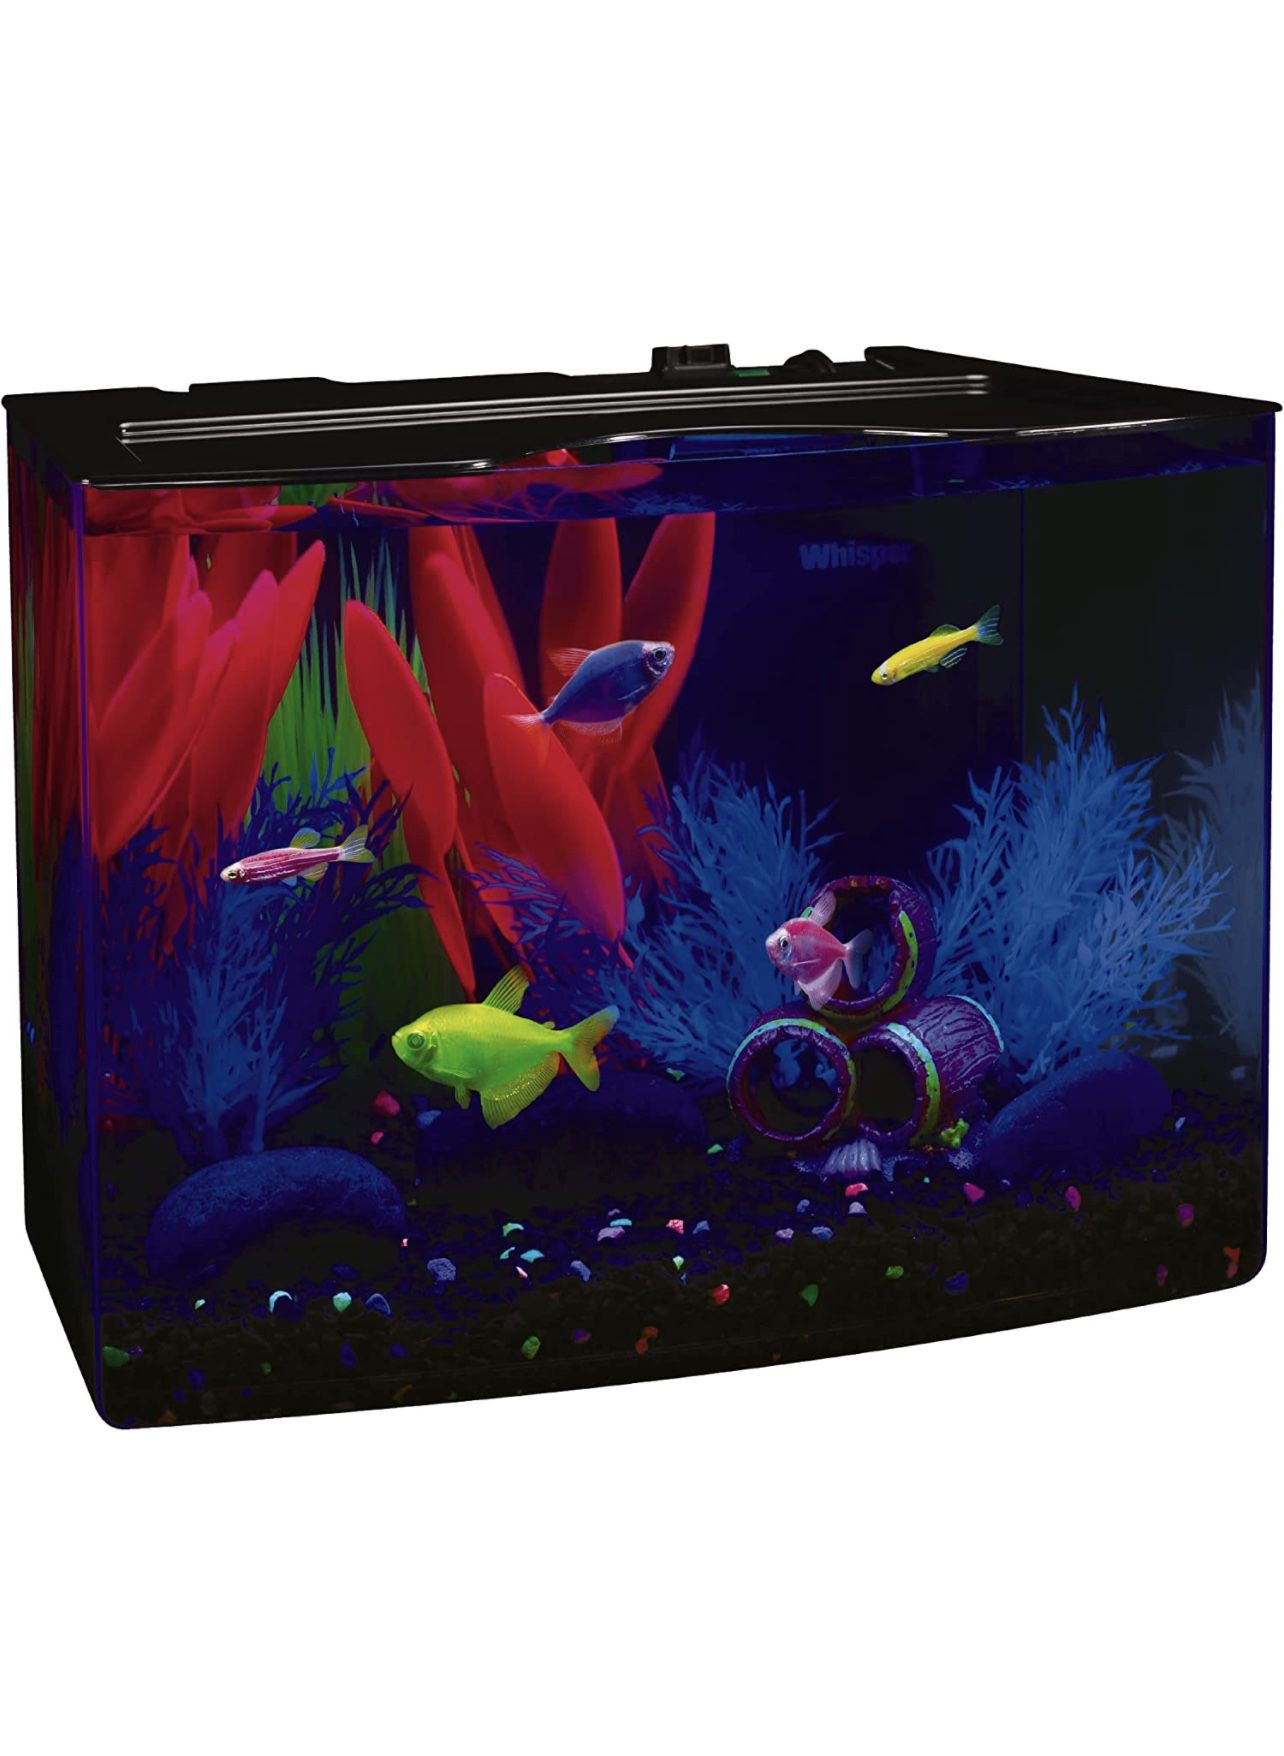 GloFish Crescent aquarium Kit 3 Gallons, Includes Hidden Blue LED Light And Internal Filter